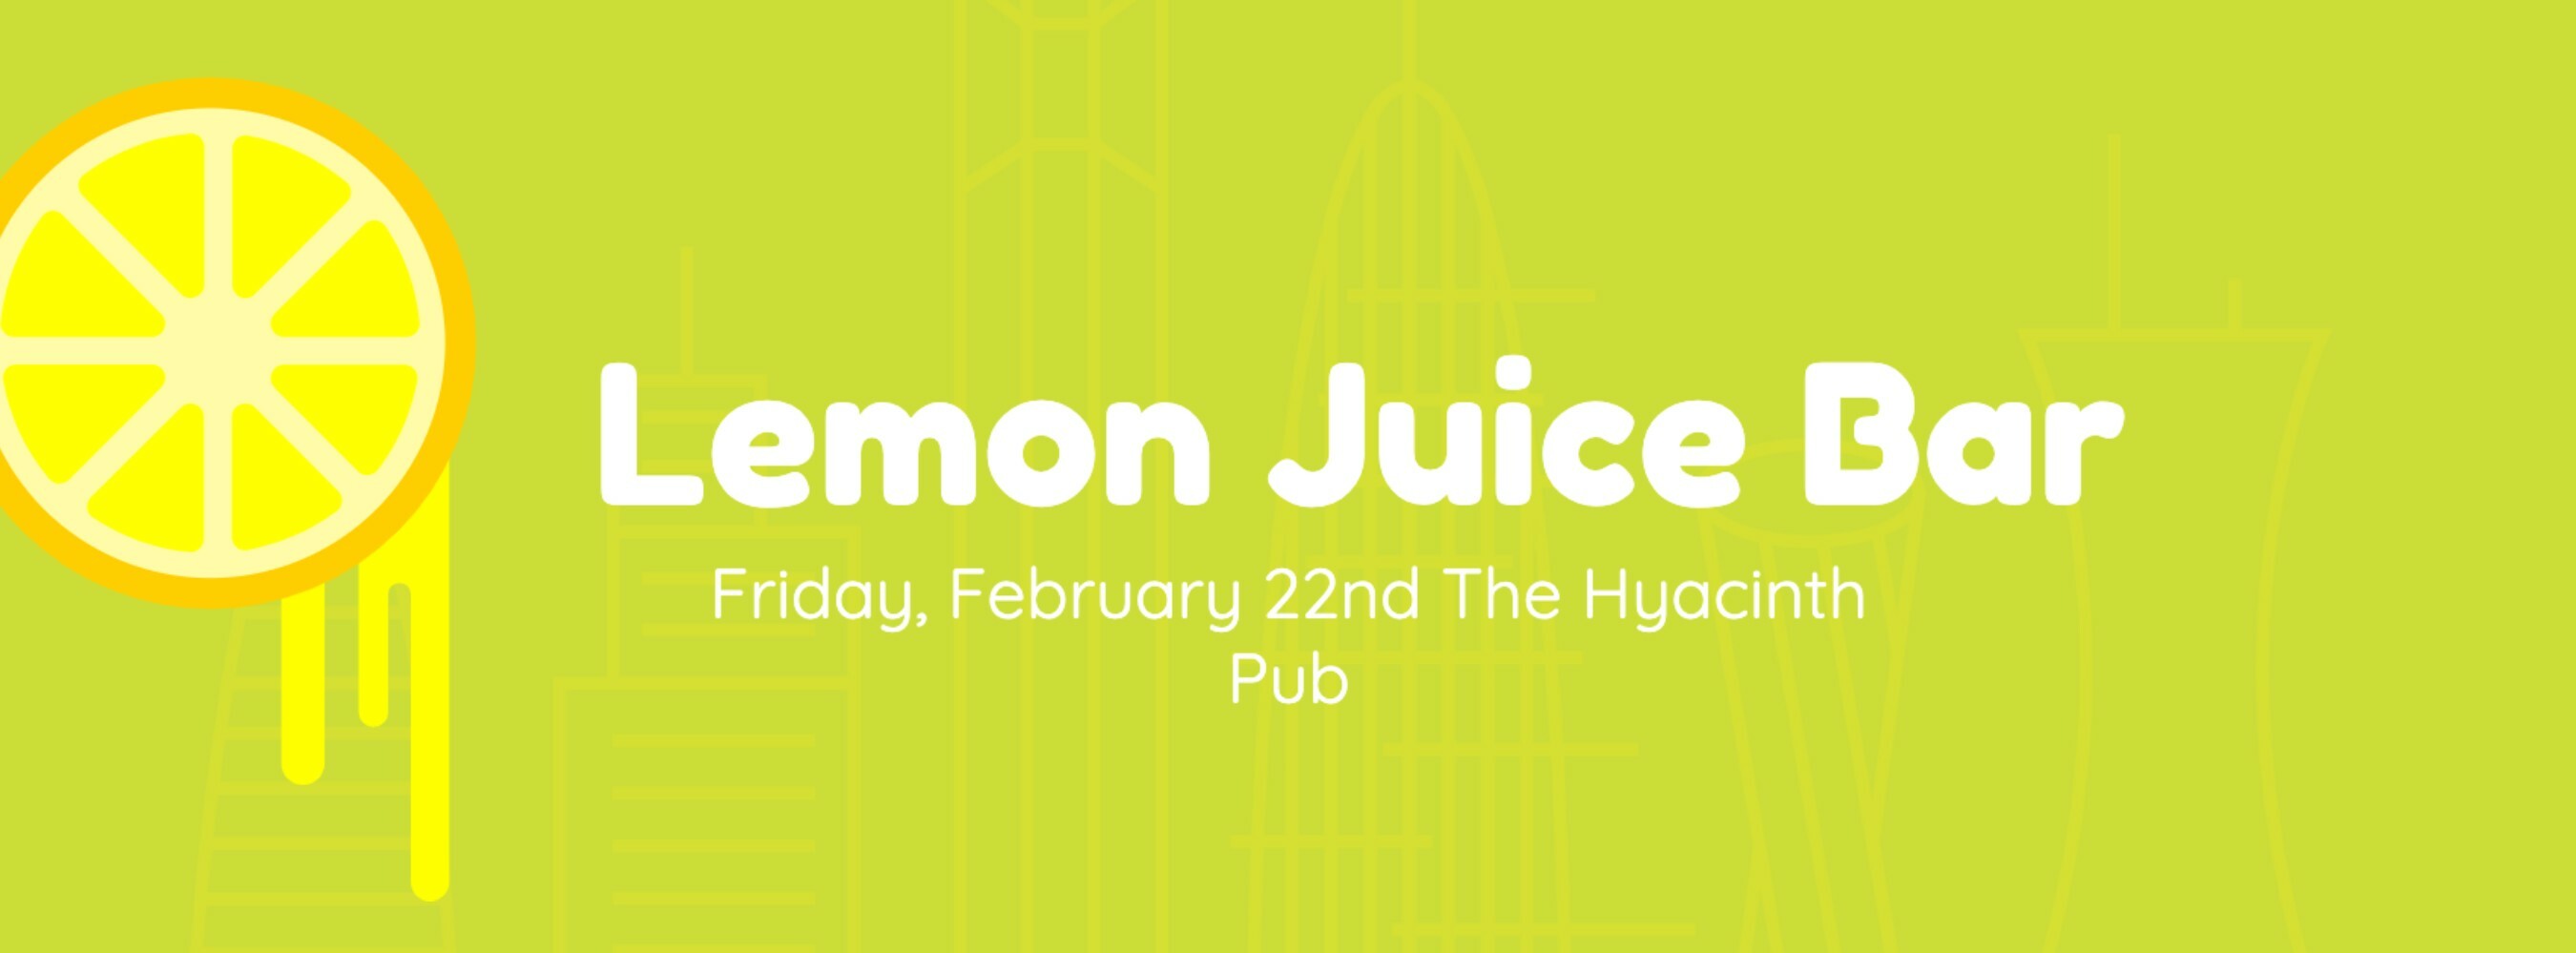 Lemon Juice Bar template